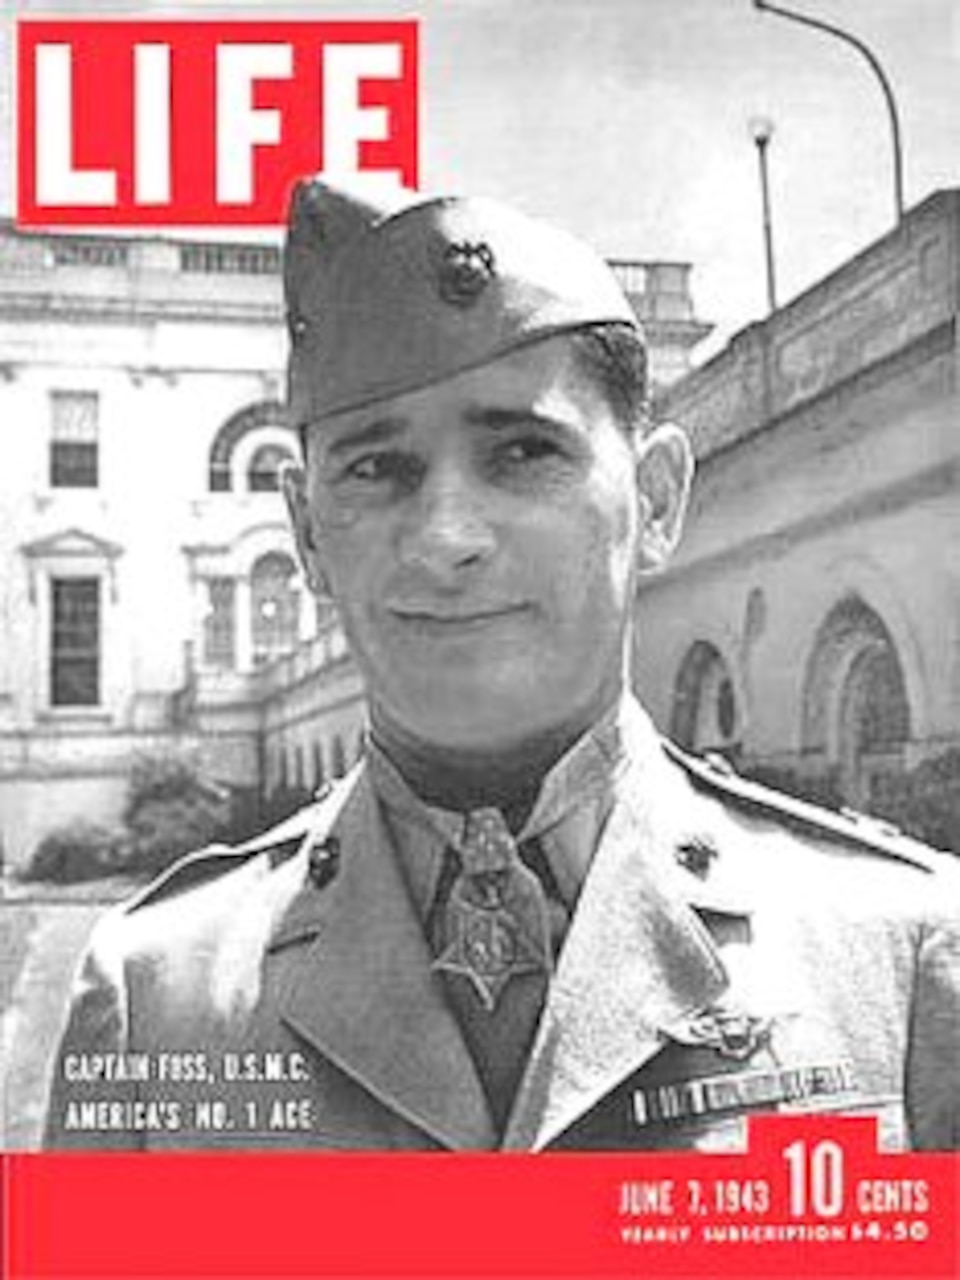 “Life” magazine cover featuring Joseph Foss in uniform.